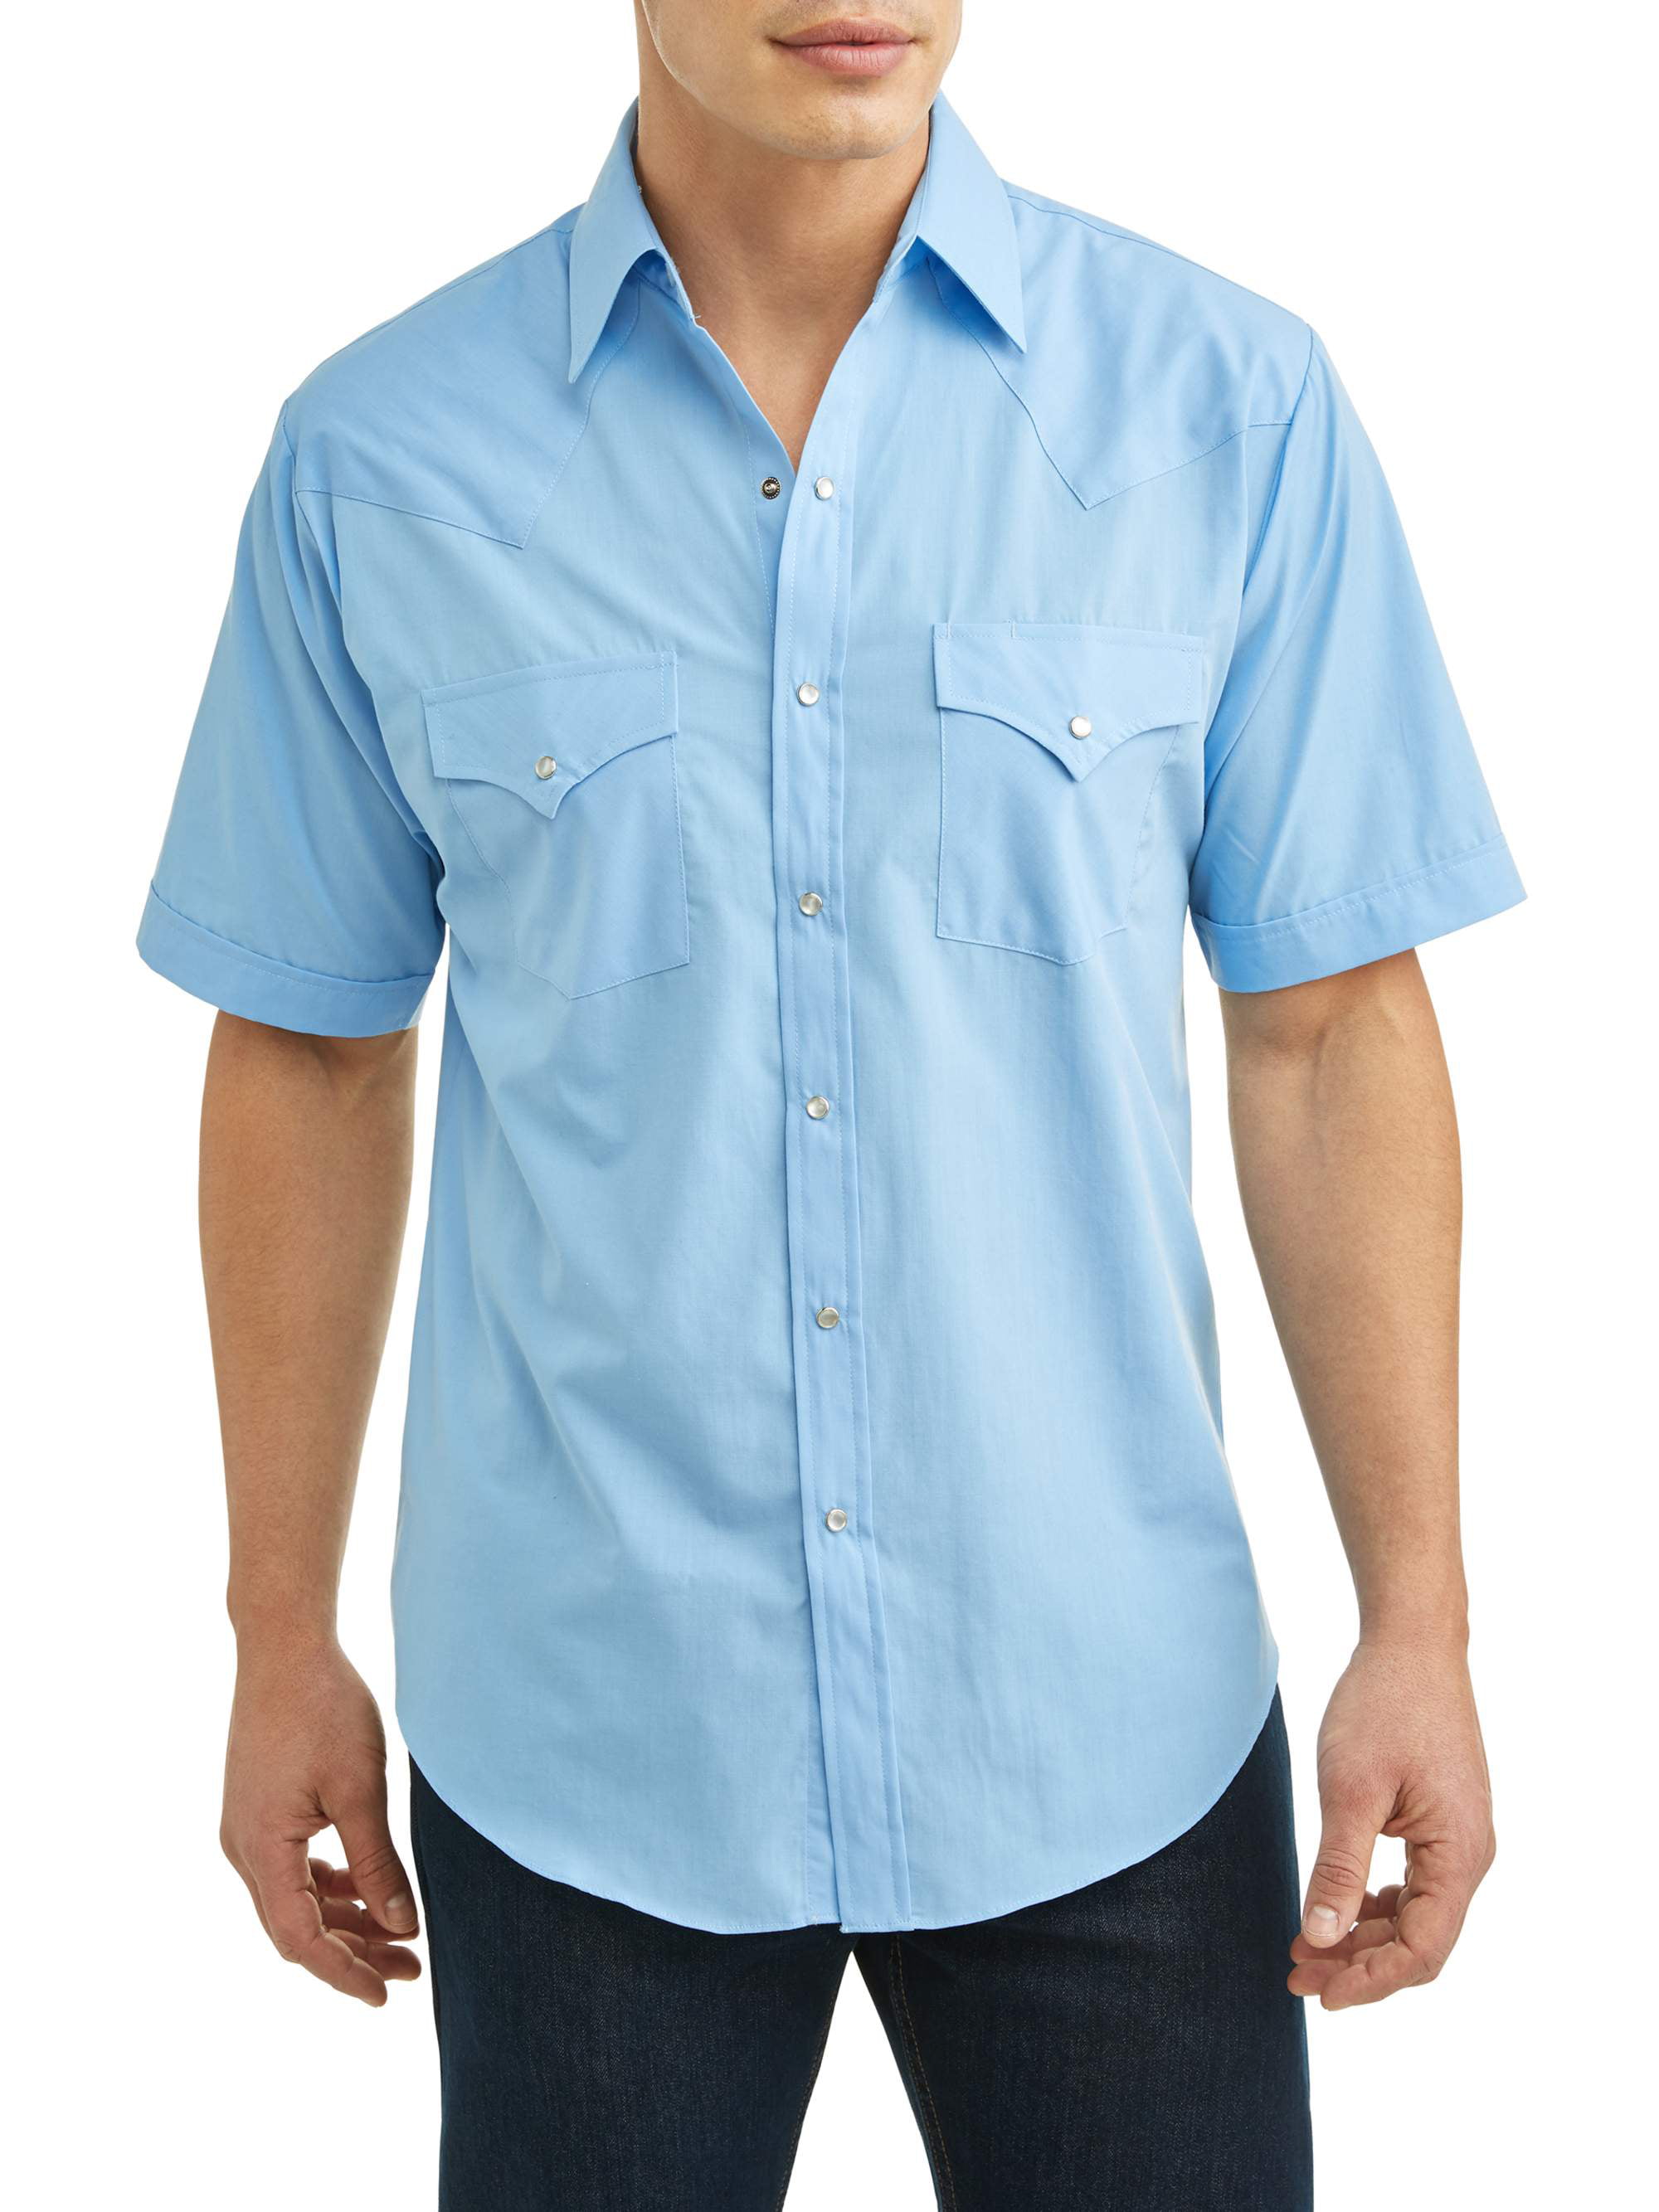 Plains Men's Short Sleeve Solid Western Shirt, up to Size 6XL - Walmart.com